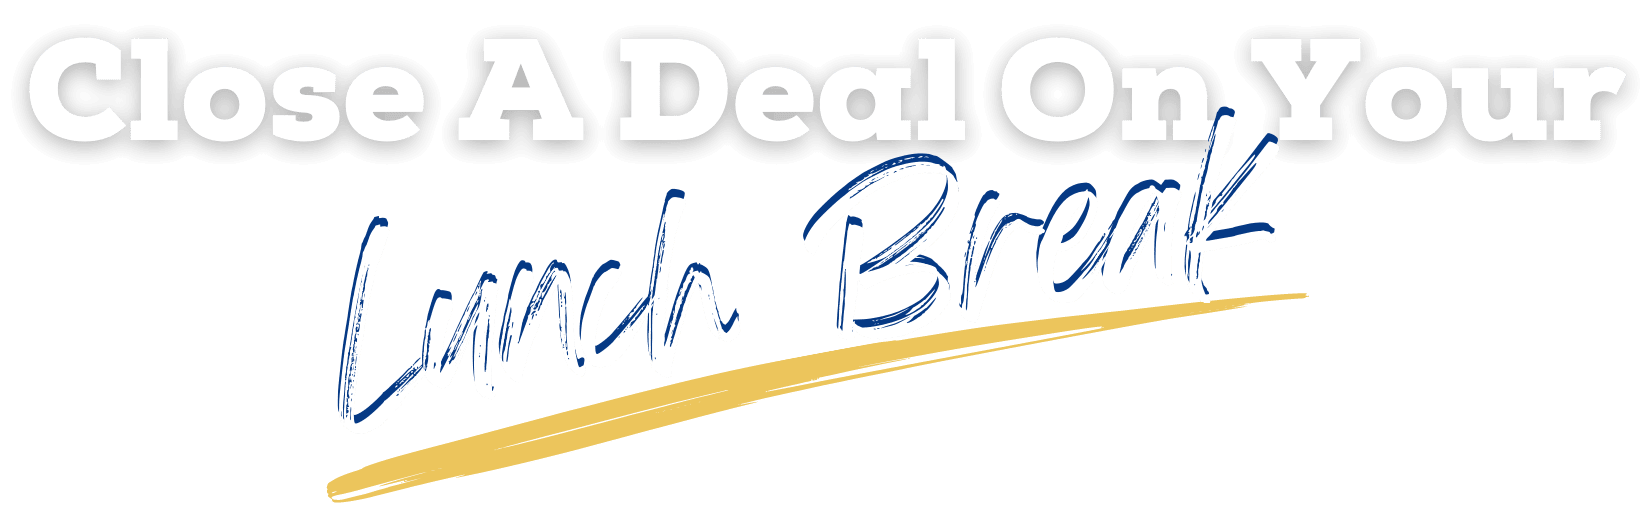 Close A Deal On Your Lunch Break Webinar